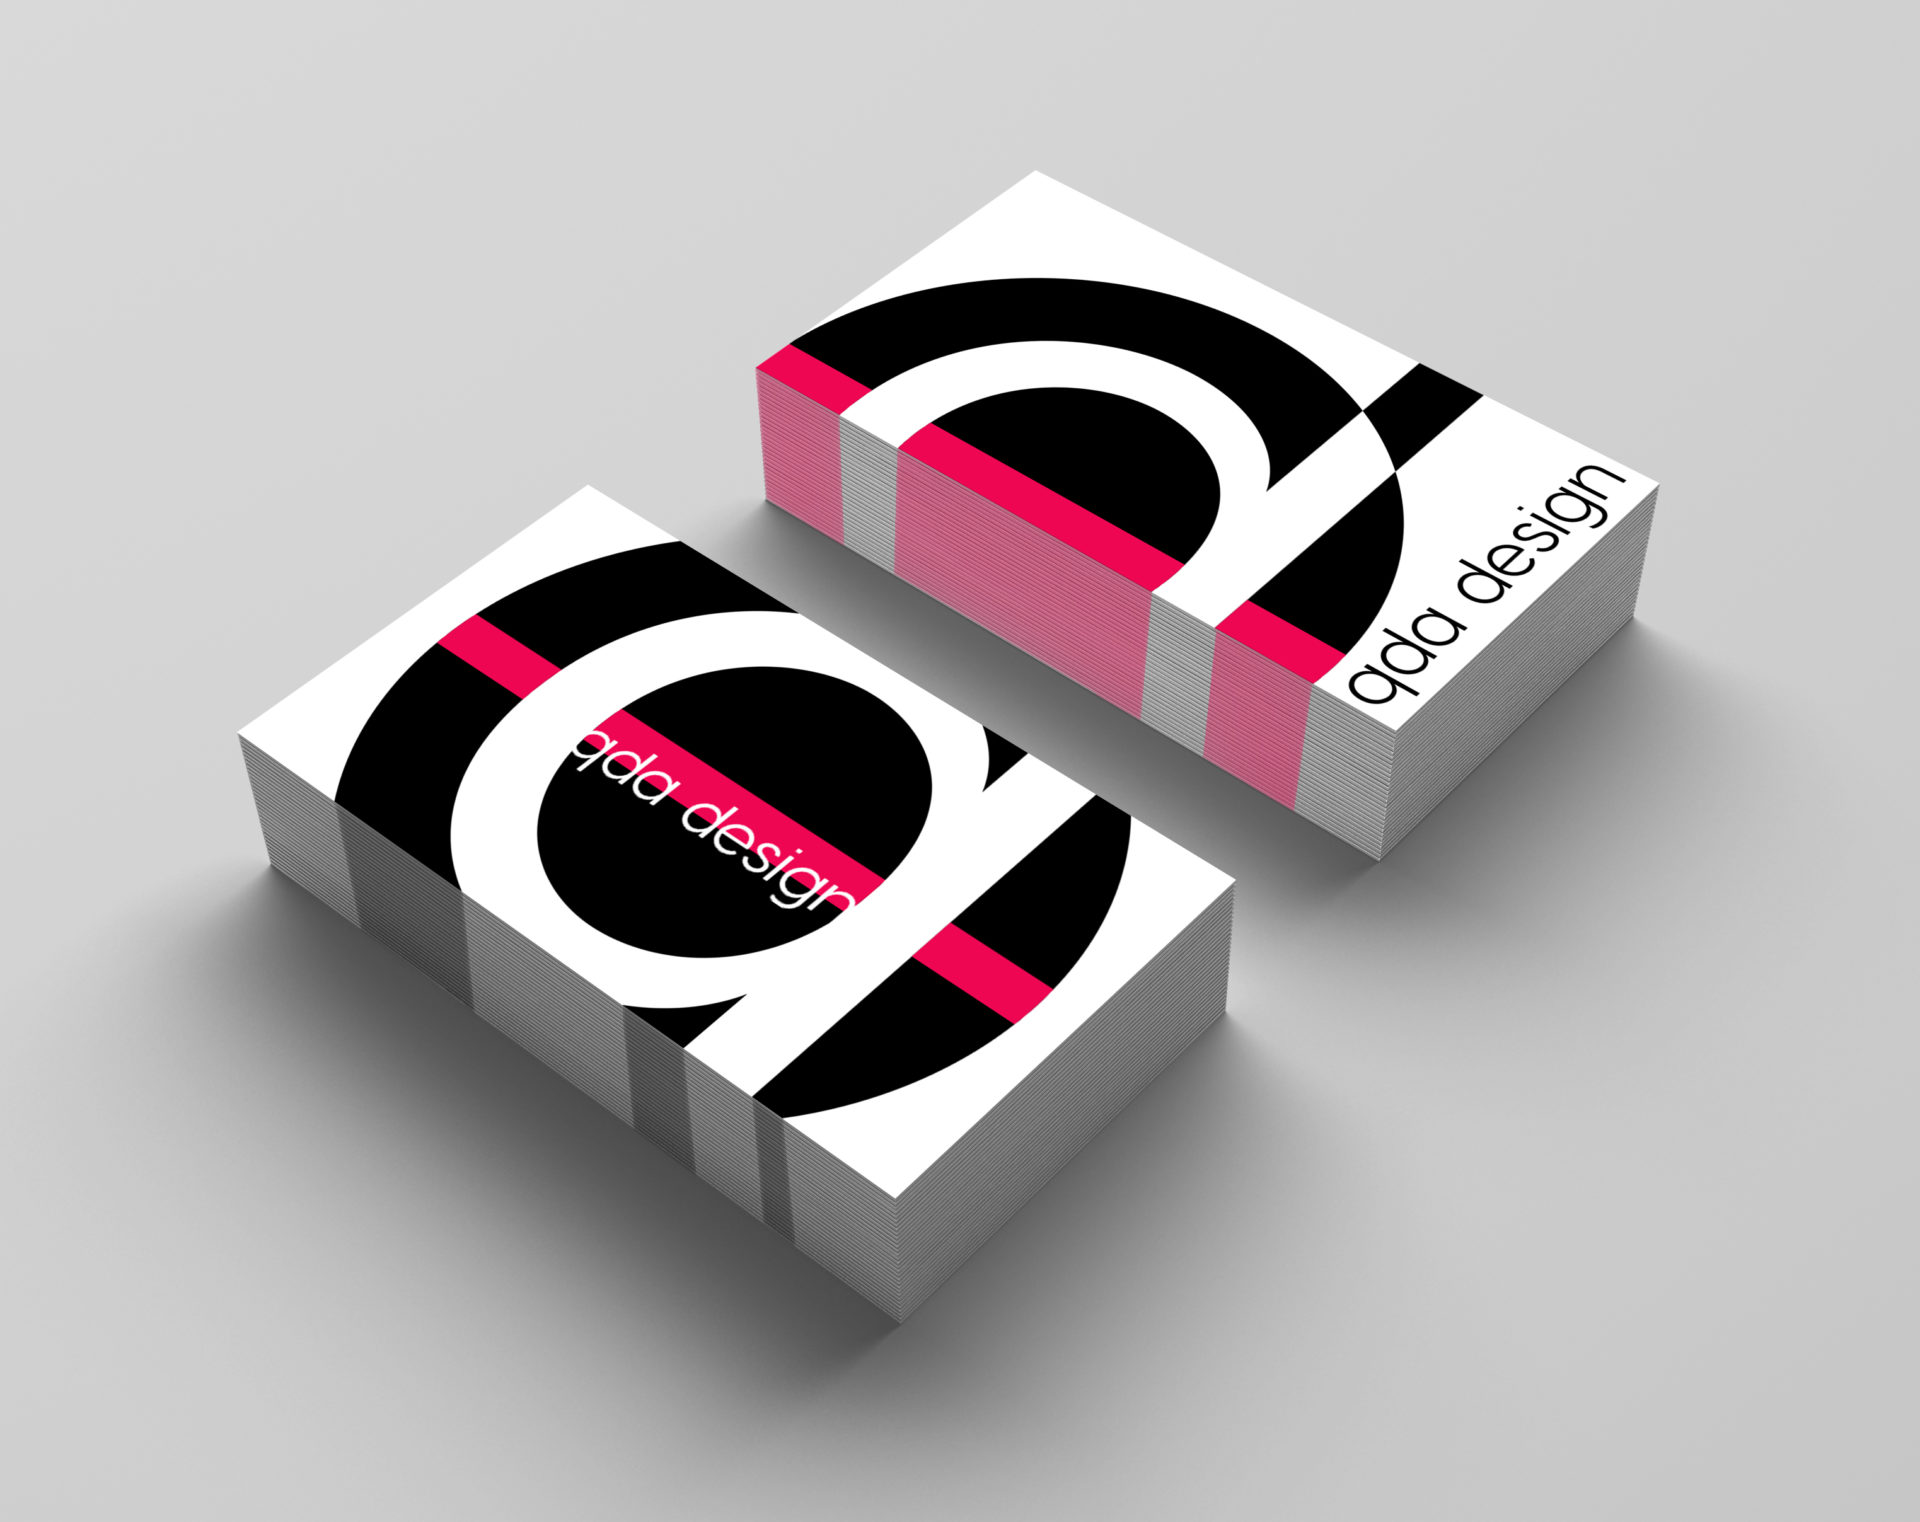 qda design visitenkarte mit logo qda design